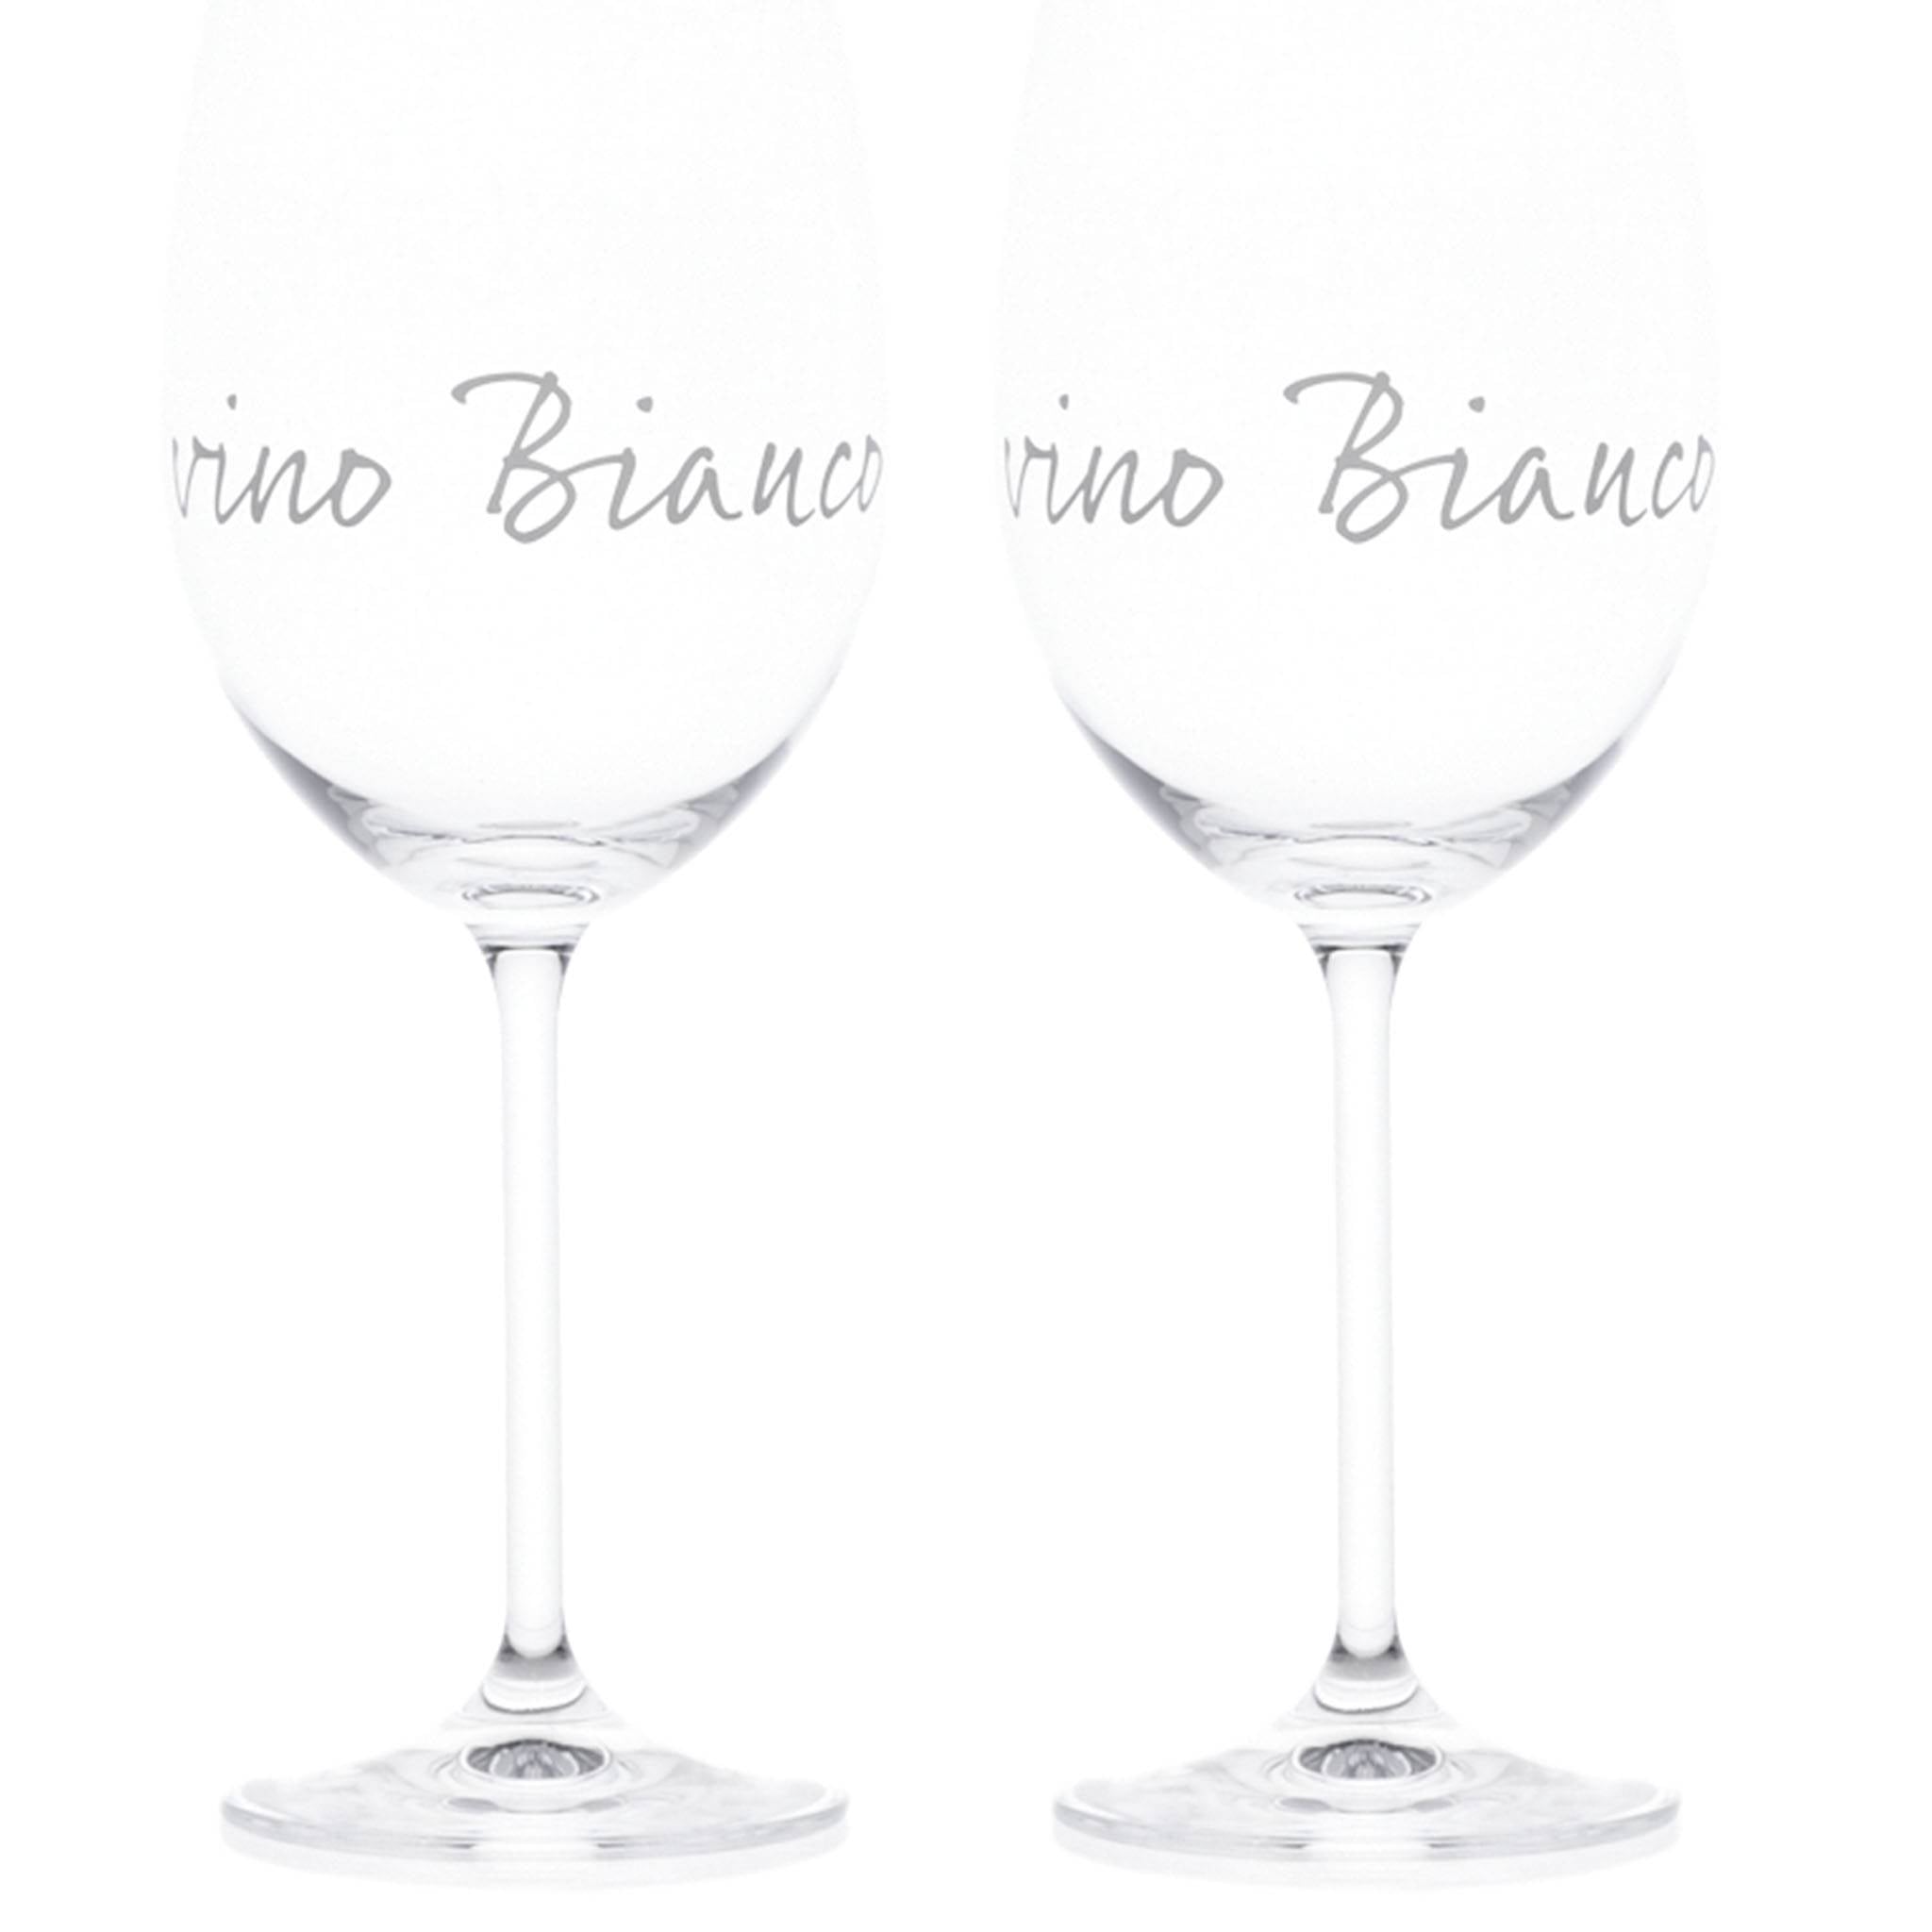 Weingläser "Vino Bianco" 2er-Set